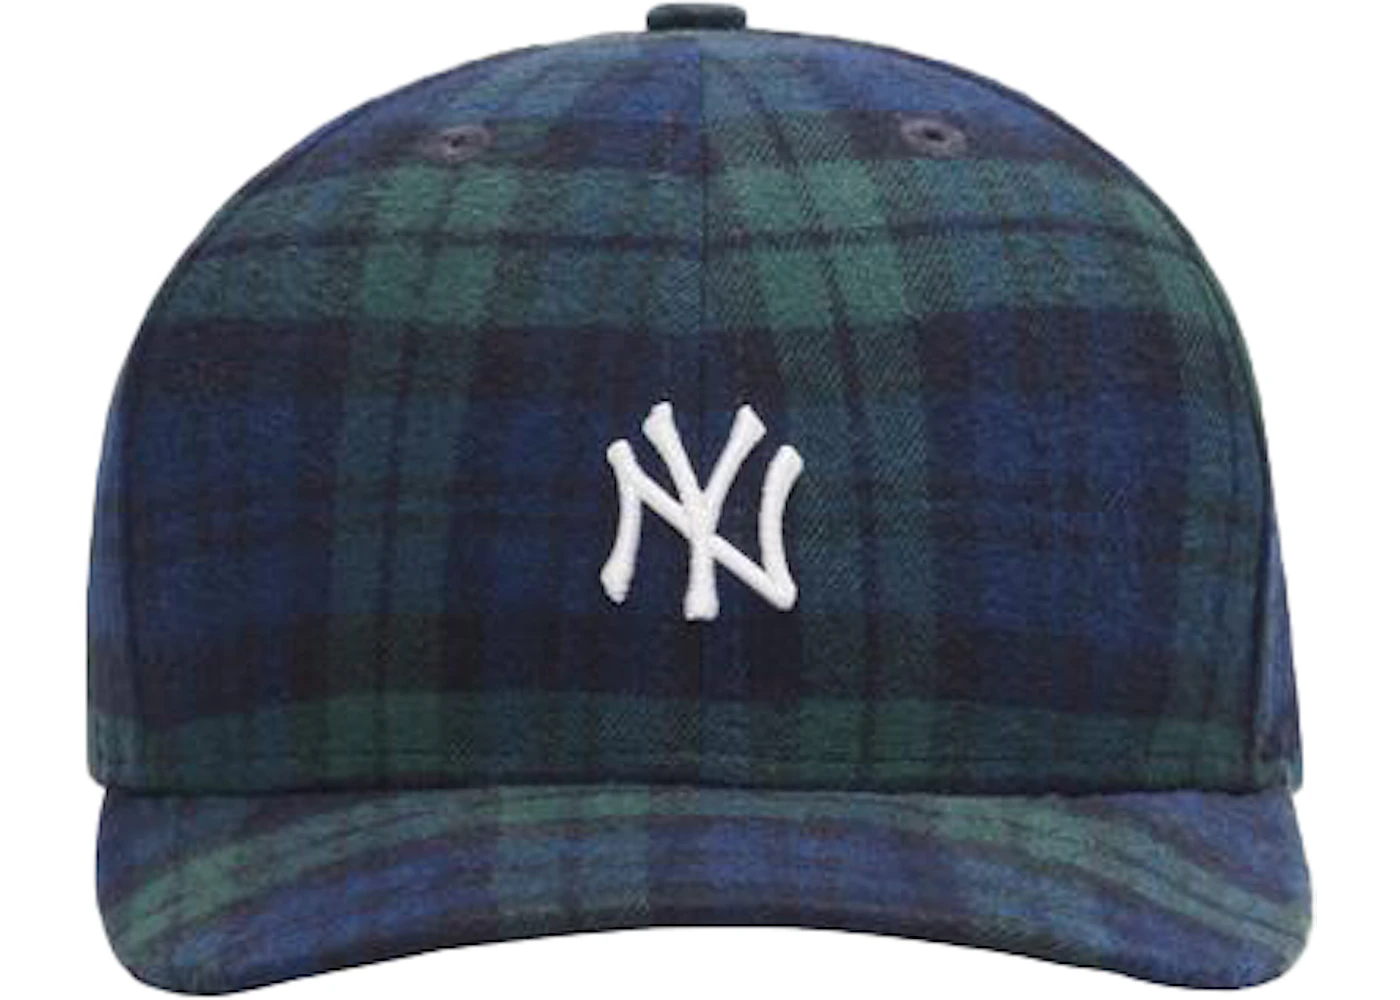 Kith x New York Yankees Plaid New Era Cap Blackwatch